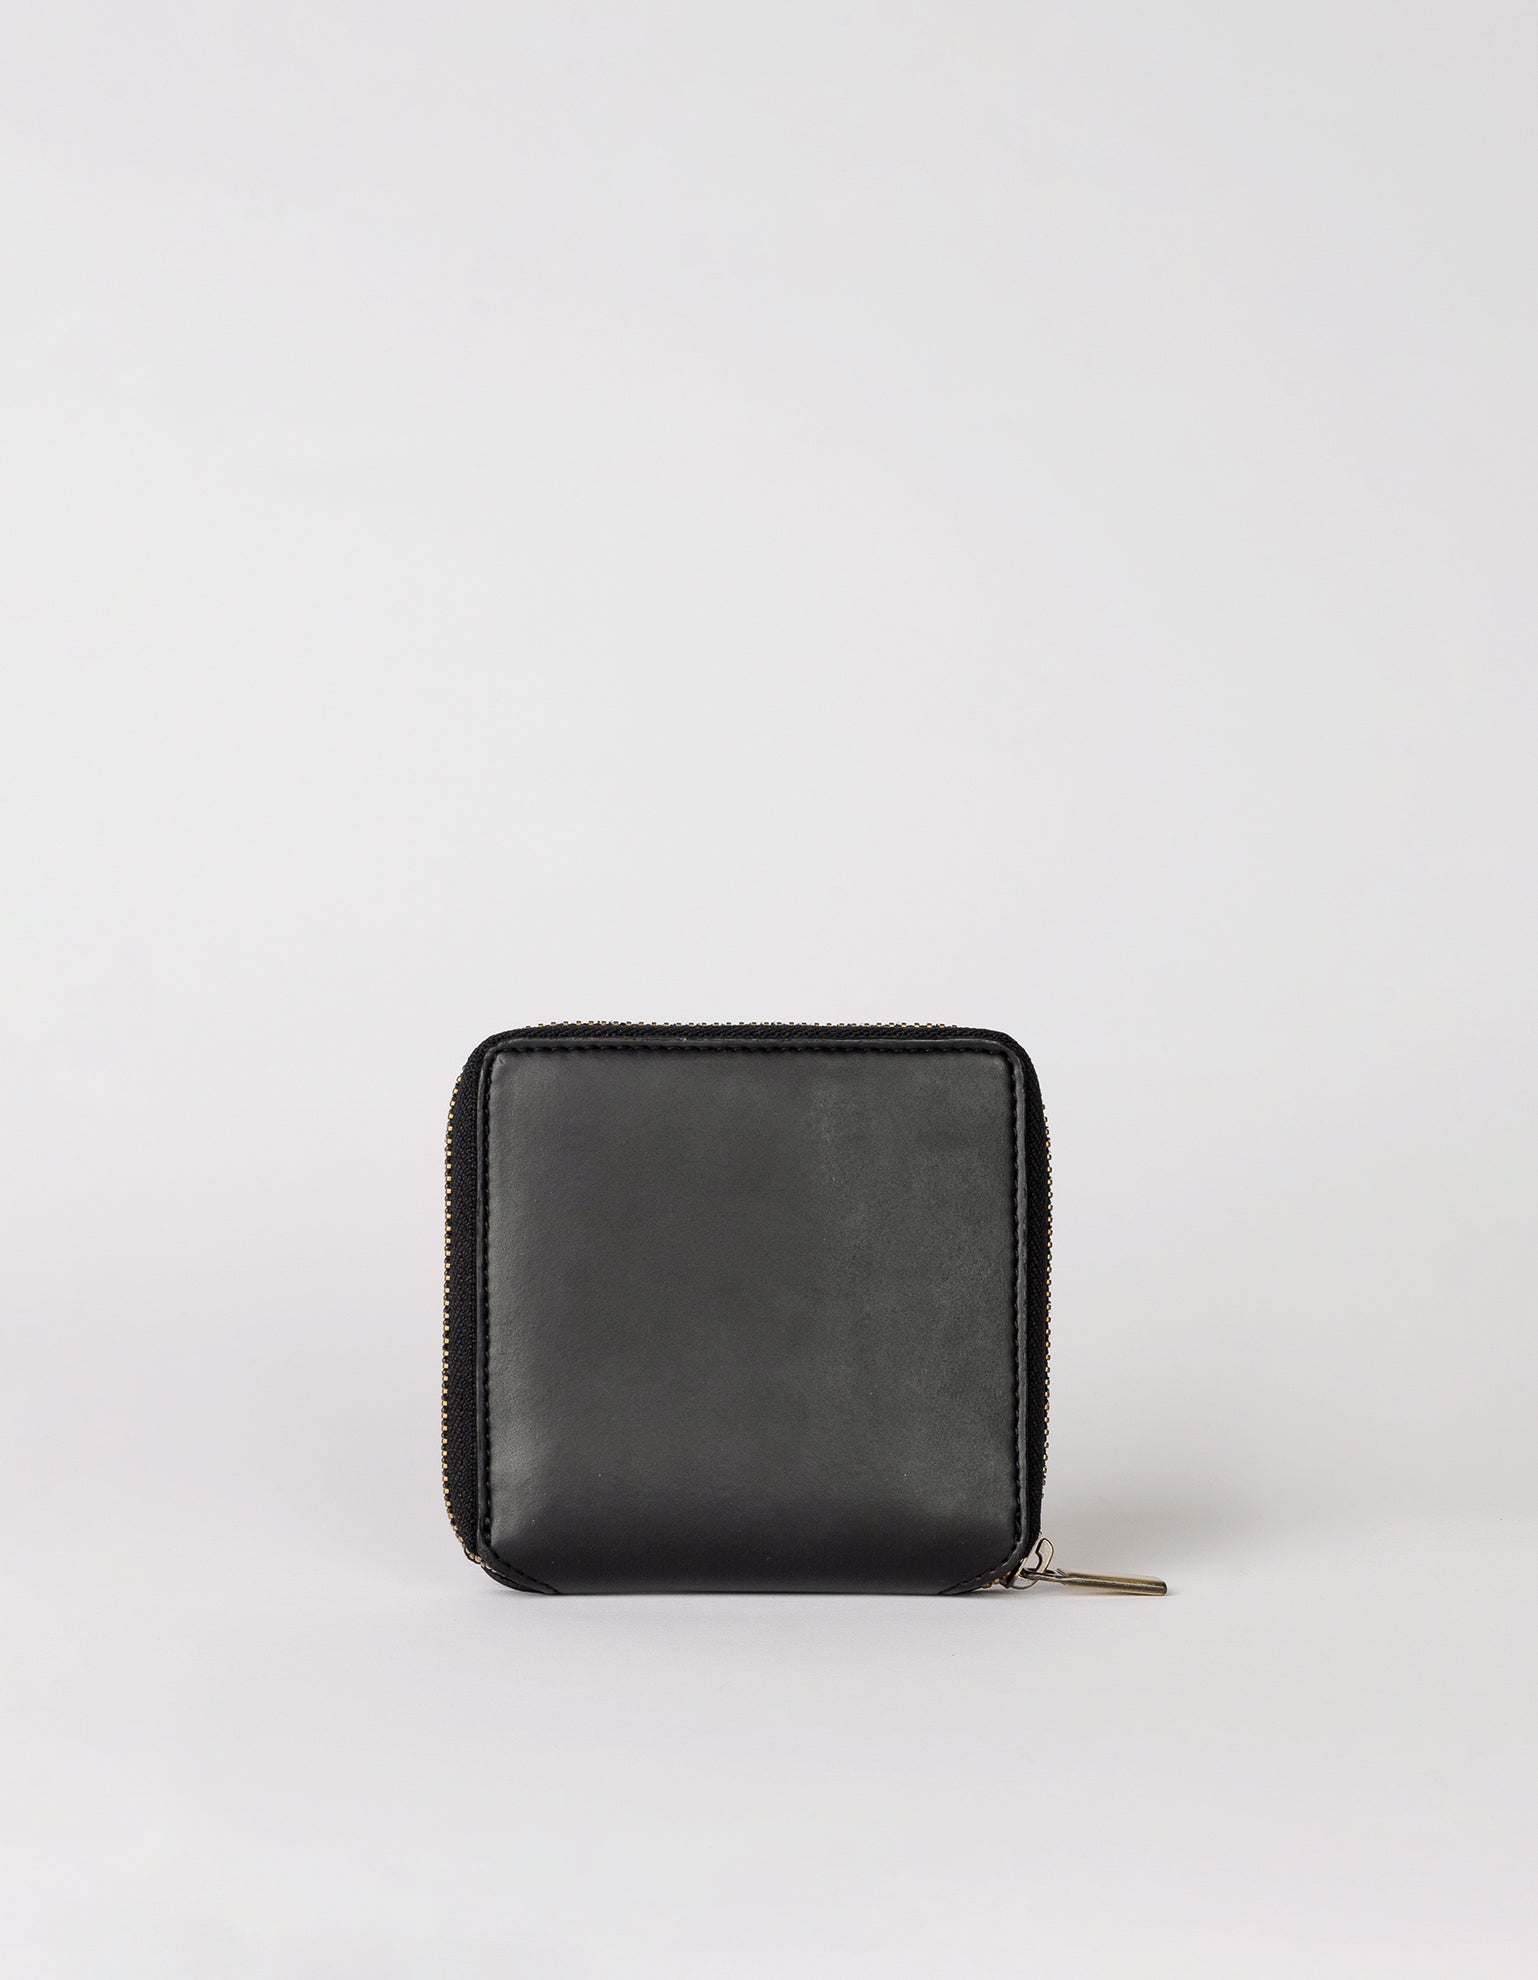 Sonny Square Wallet - Black Apple Leather - back product image